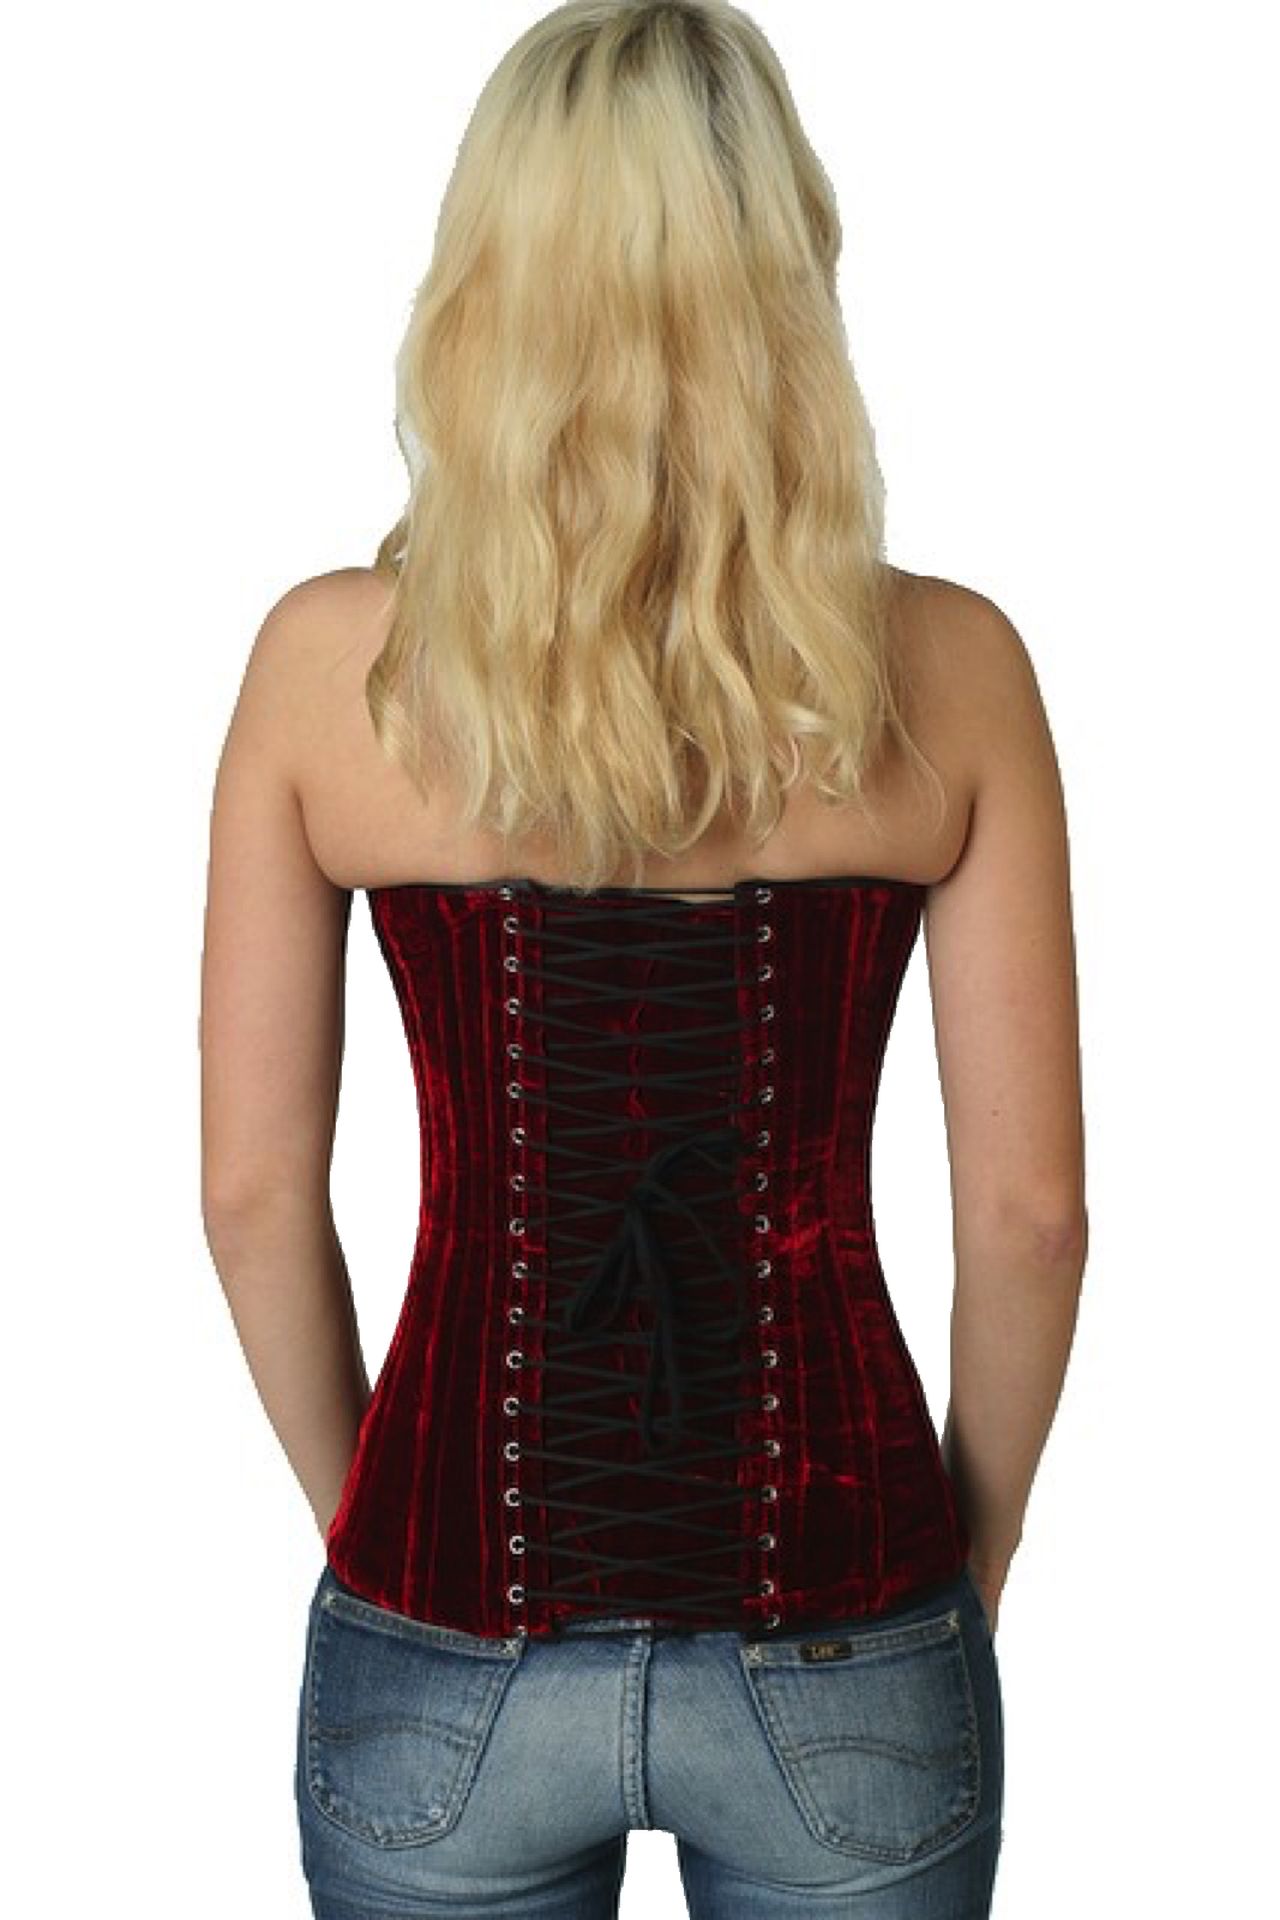 Fluweel corset rood volborst Korset vy61